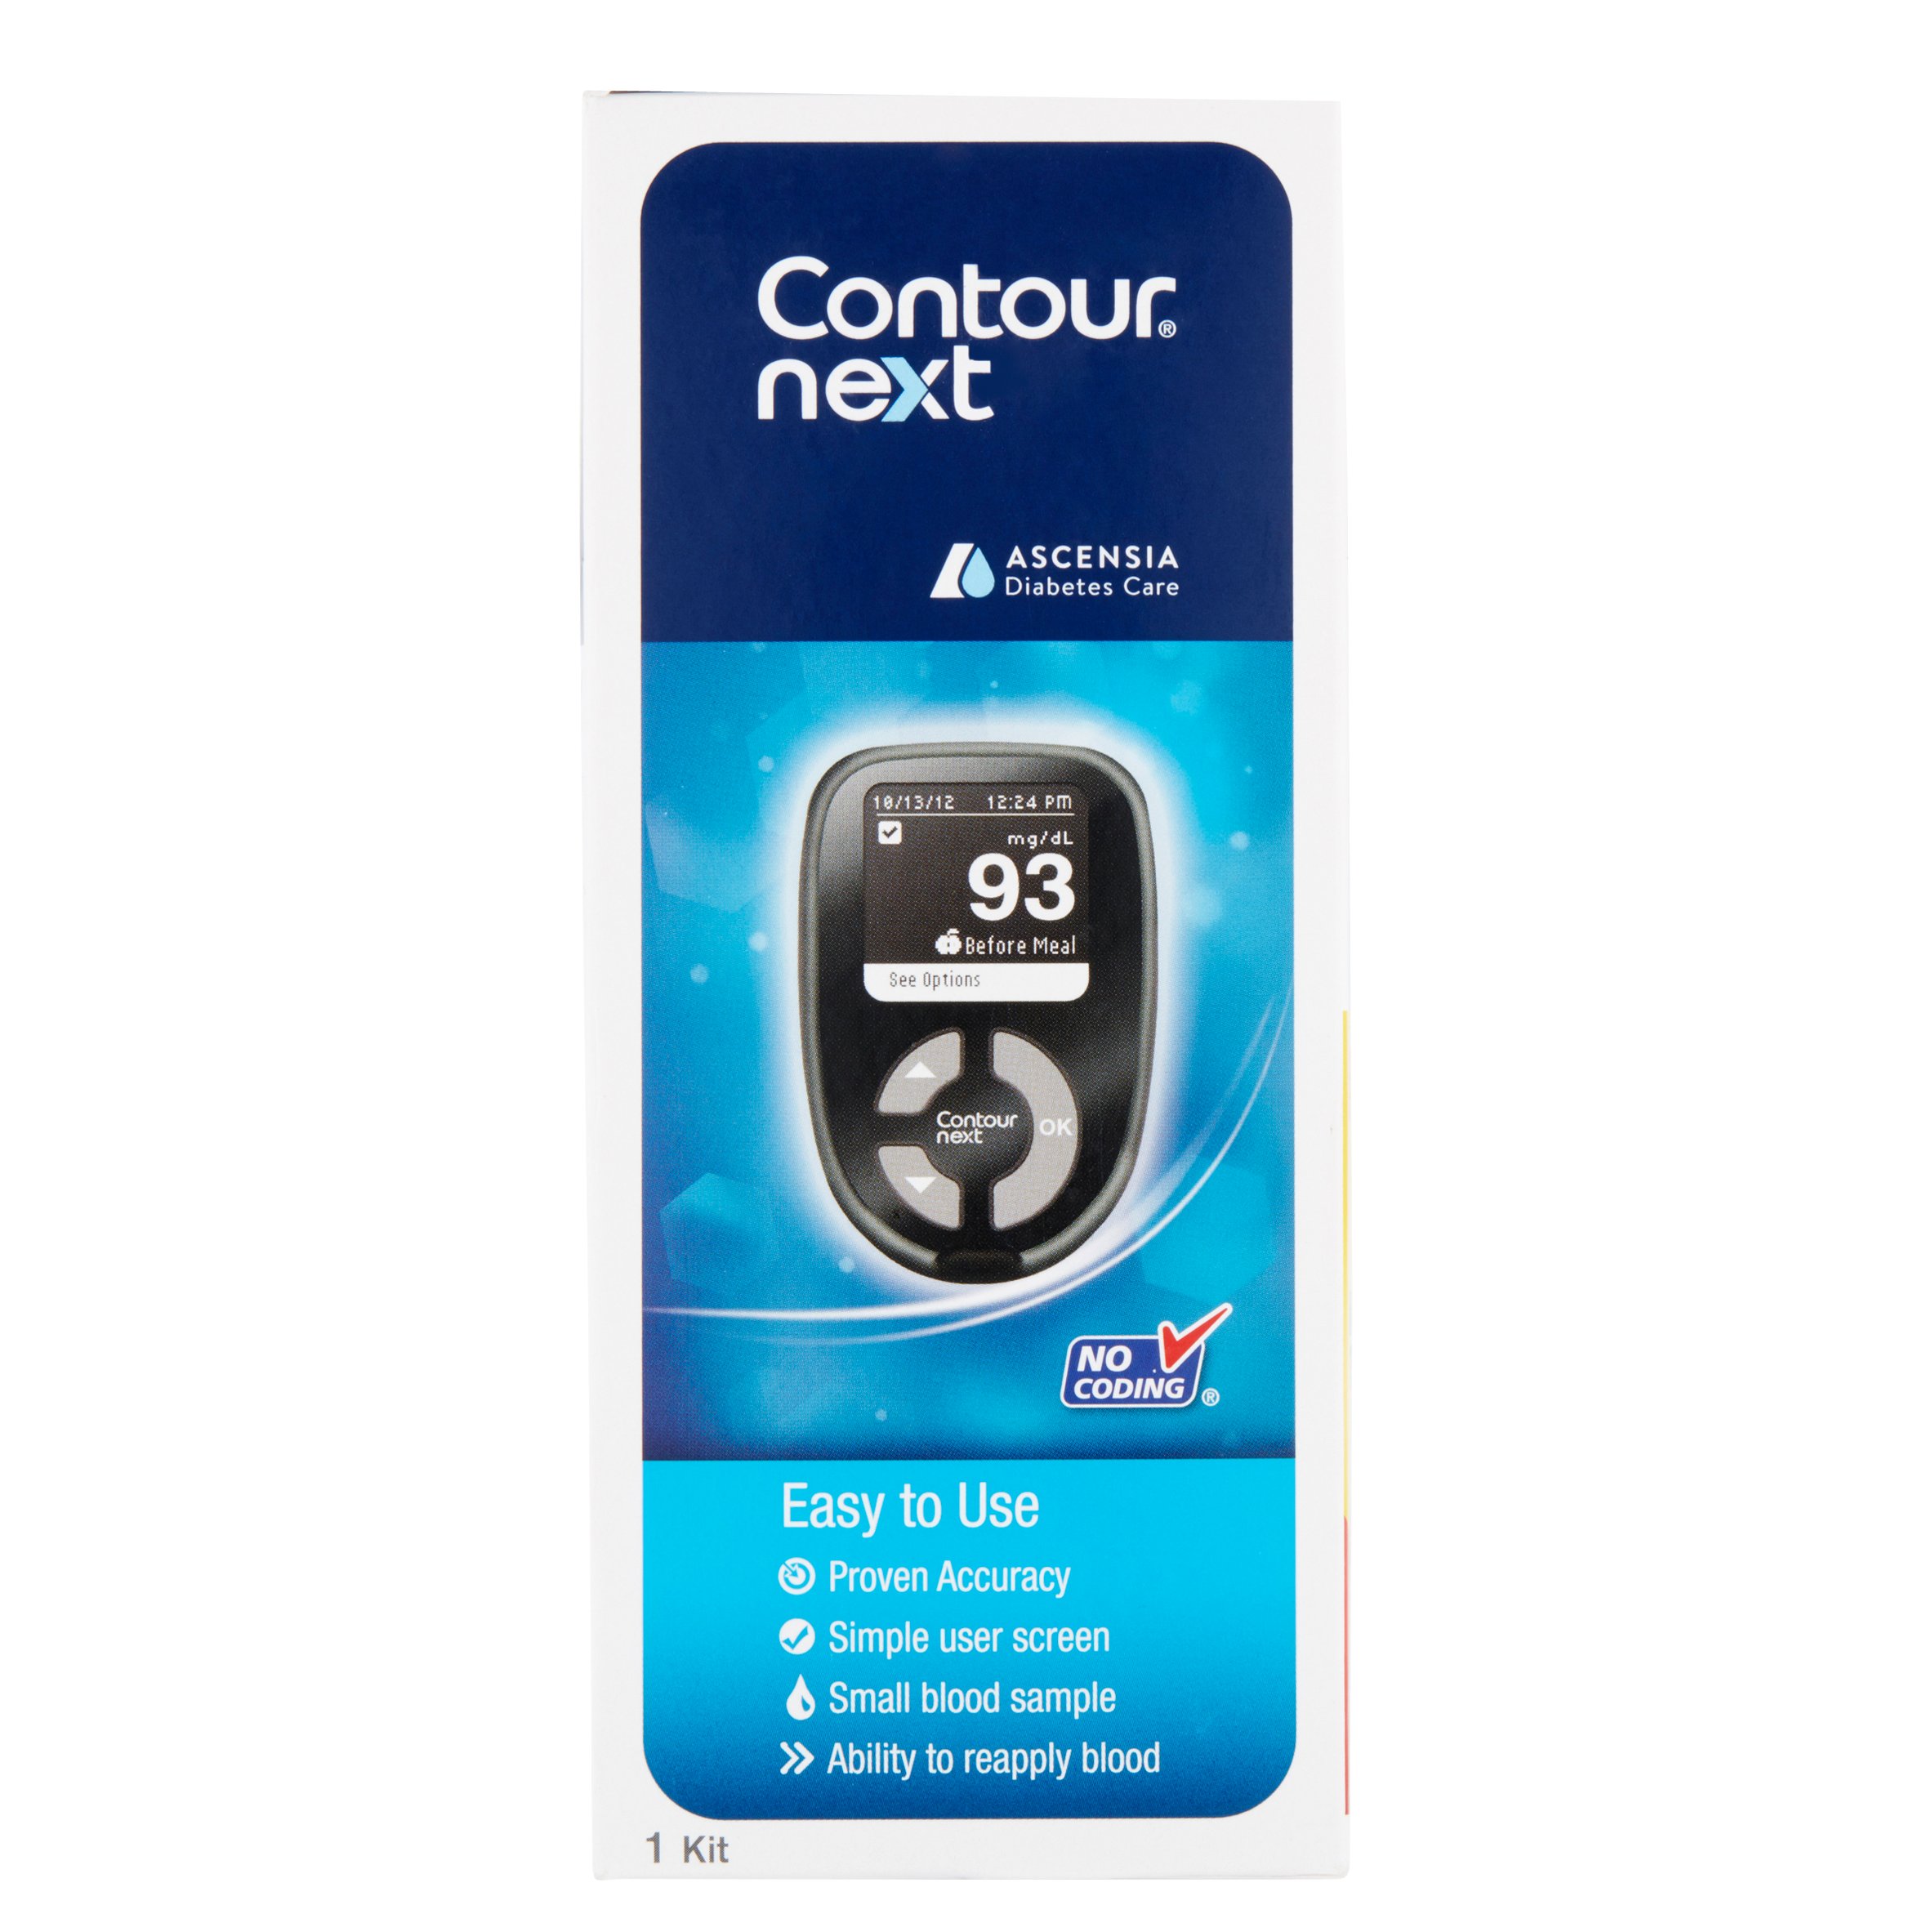 Contour Next Blood Glucose Monitoring System, 1 Kit - image 3 of 5